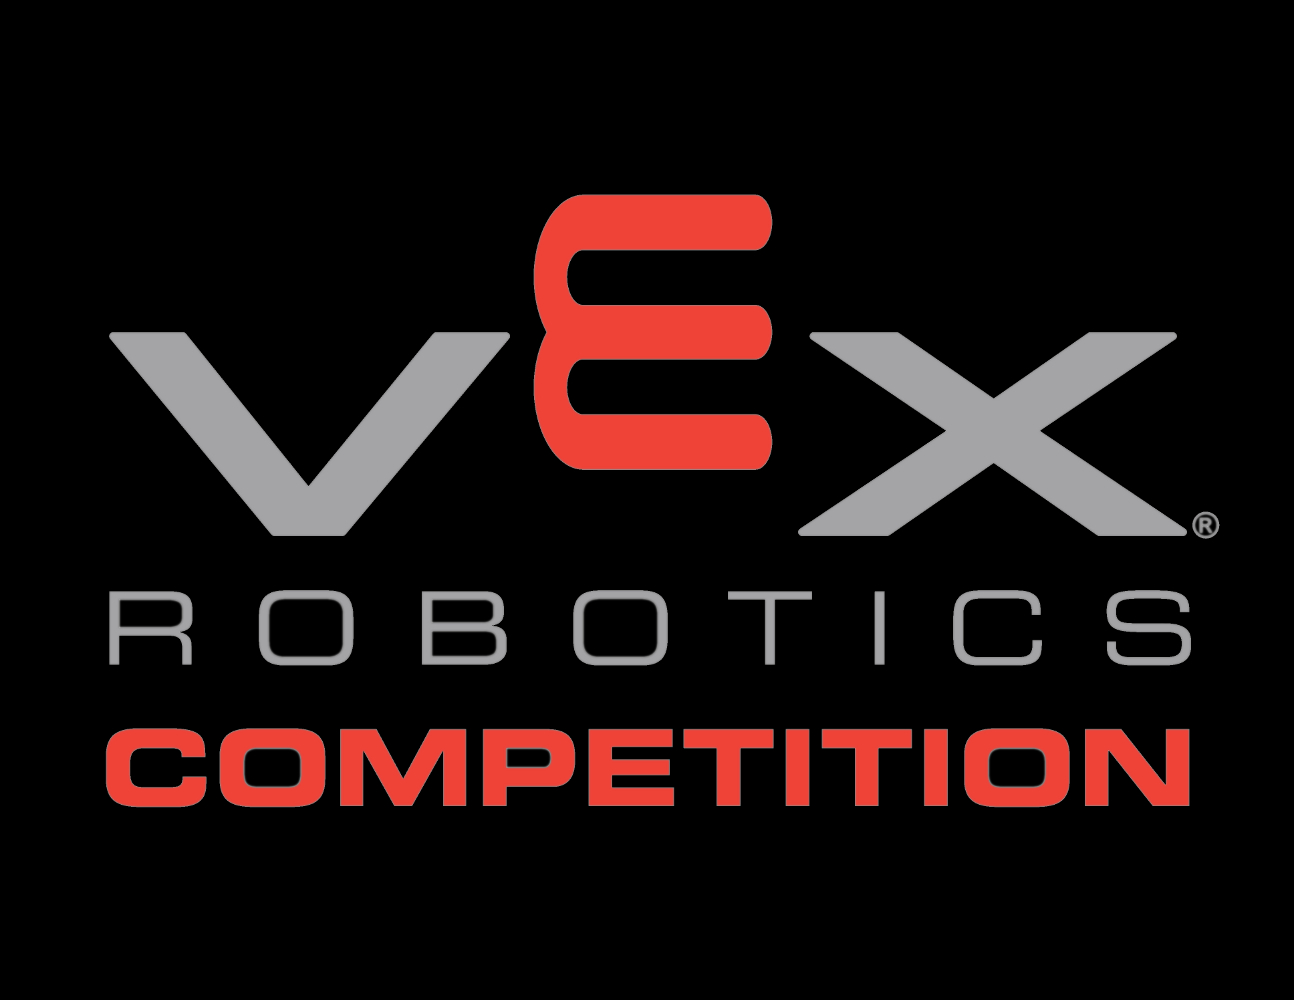 VEX Robotics Competition Coming to RDC. RDC Innovation Lab